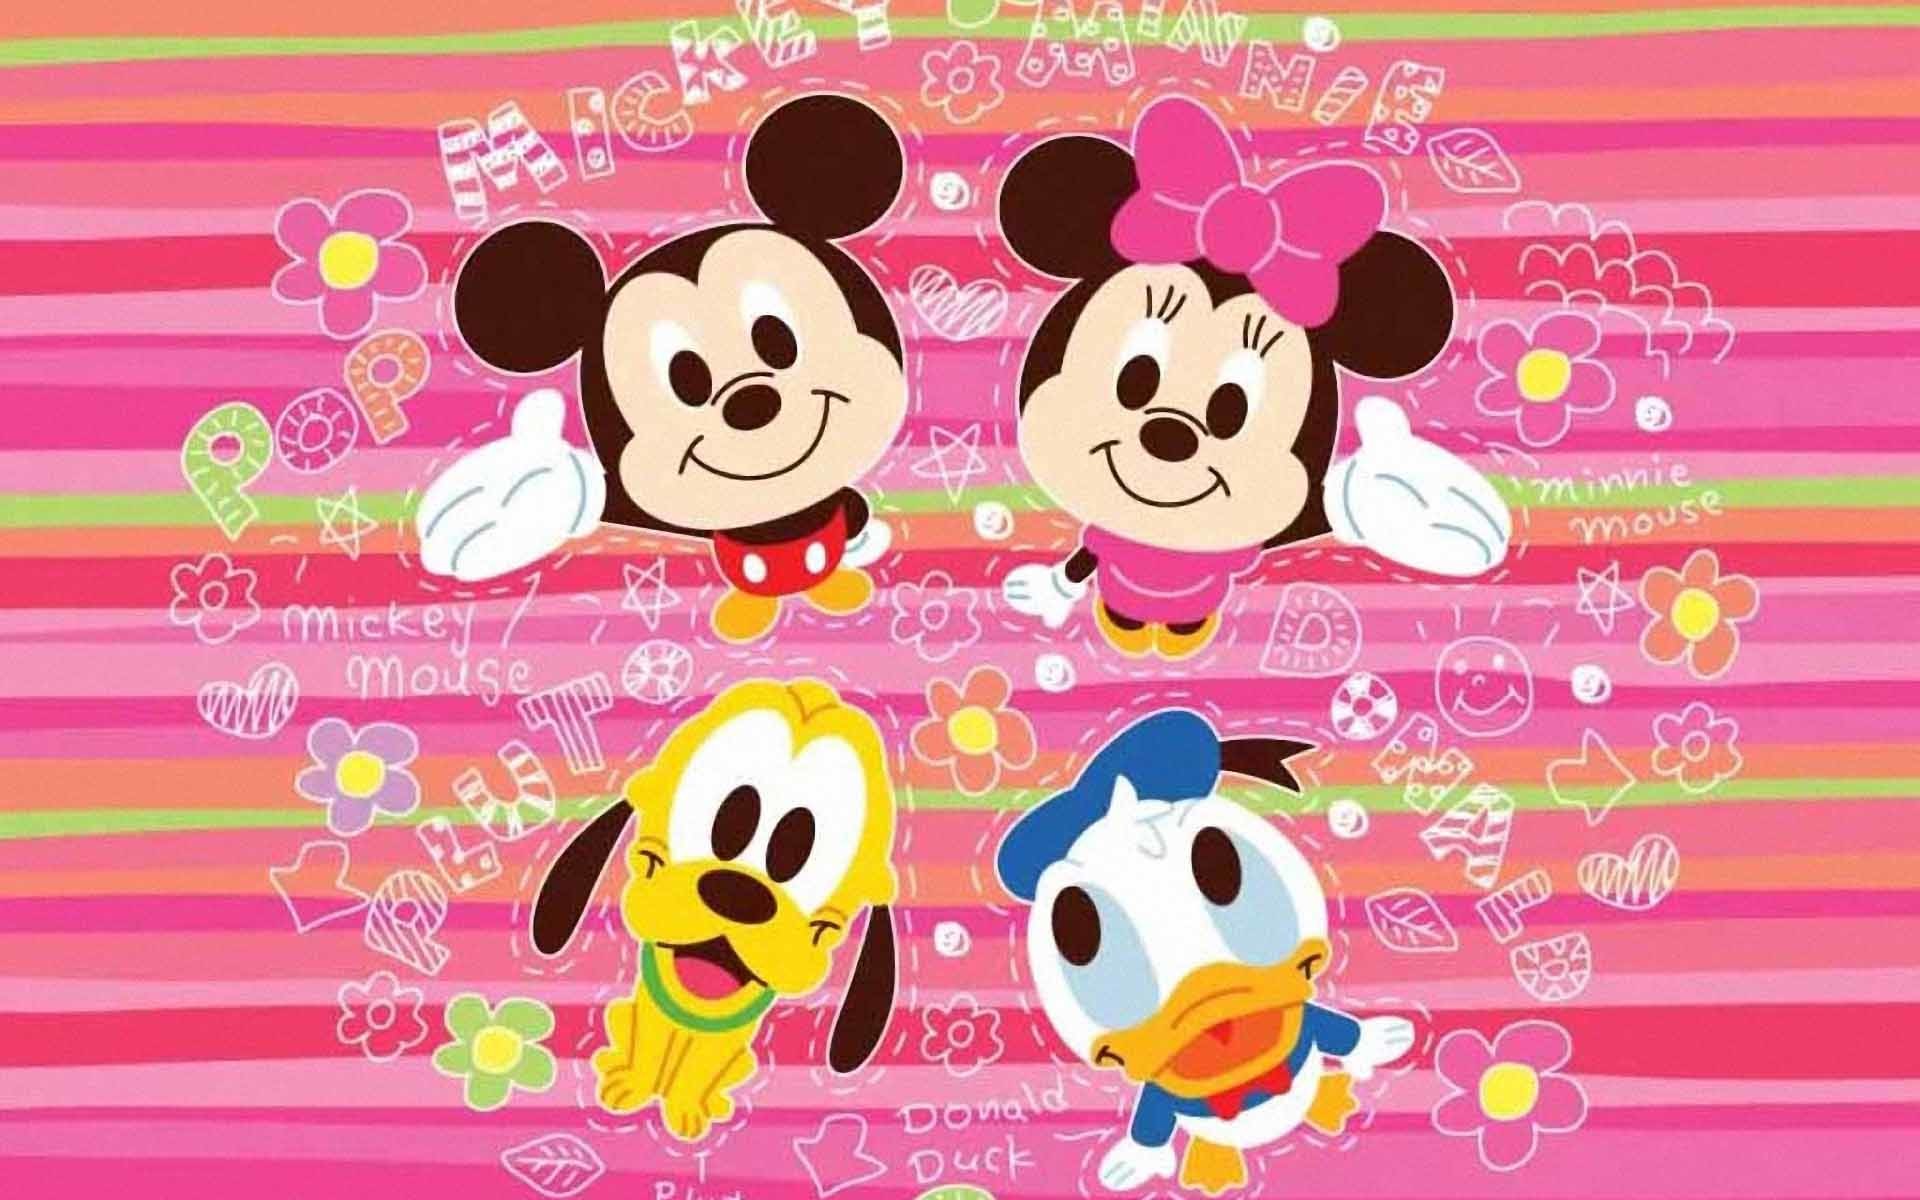 Minnie Mouse HD Wallpapers Free Download  PixelsTalkNet